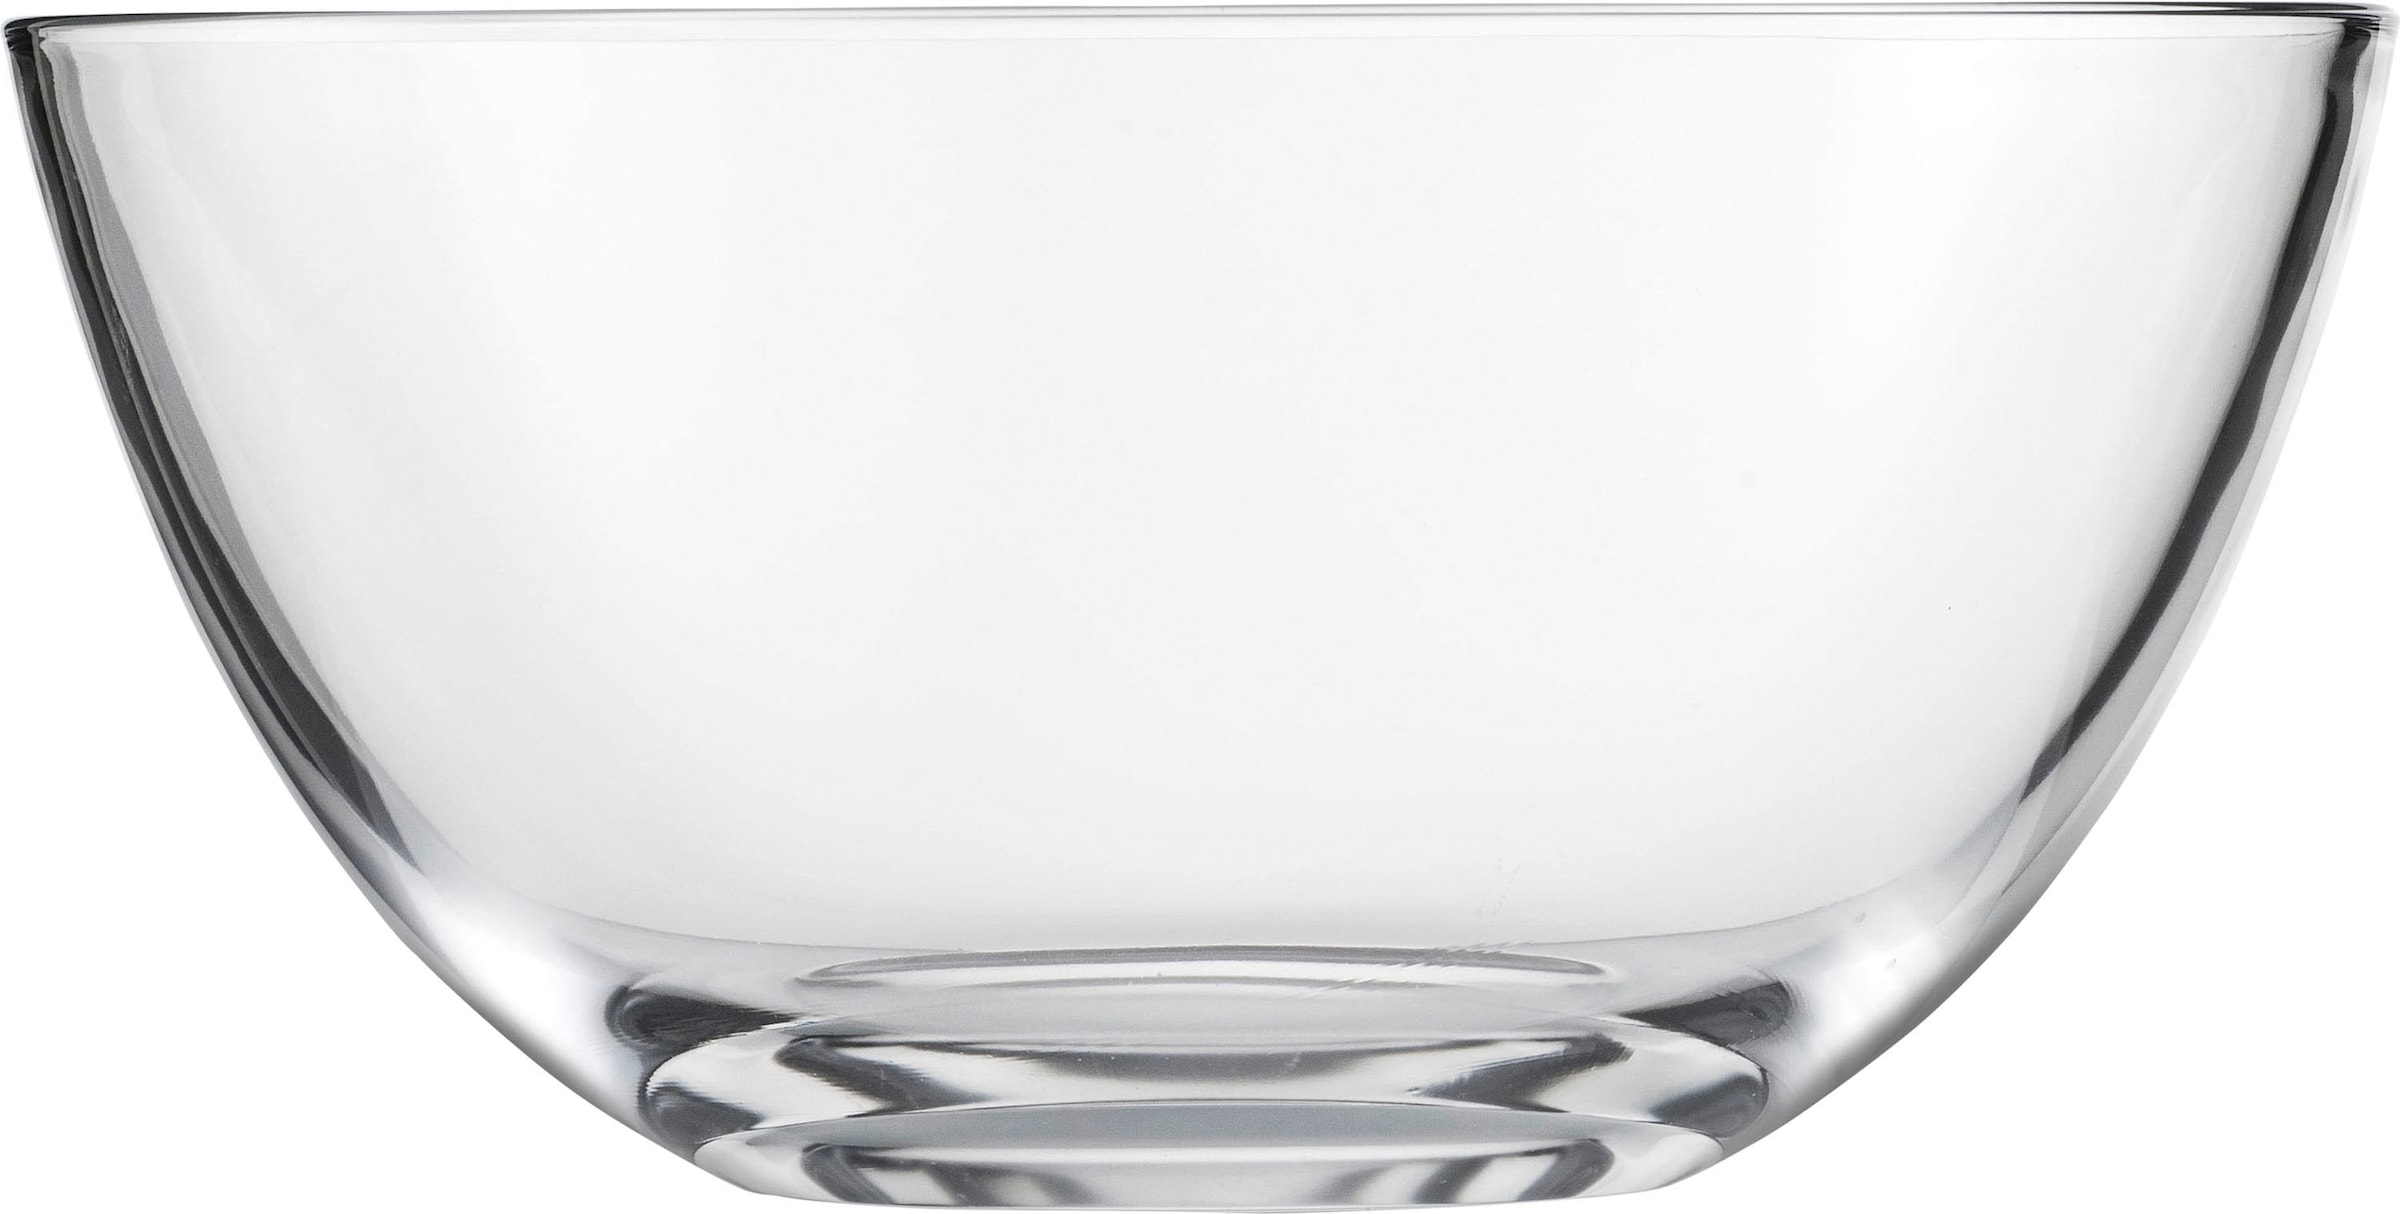 Eisch Salatschüssel »30056724«, 1 tlg., aus Kristallglas, spülmaschinengeeignet, Ø 24 cm